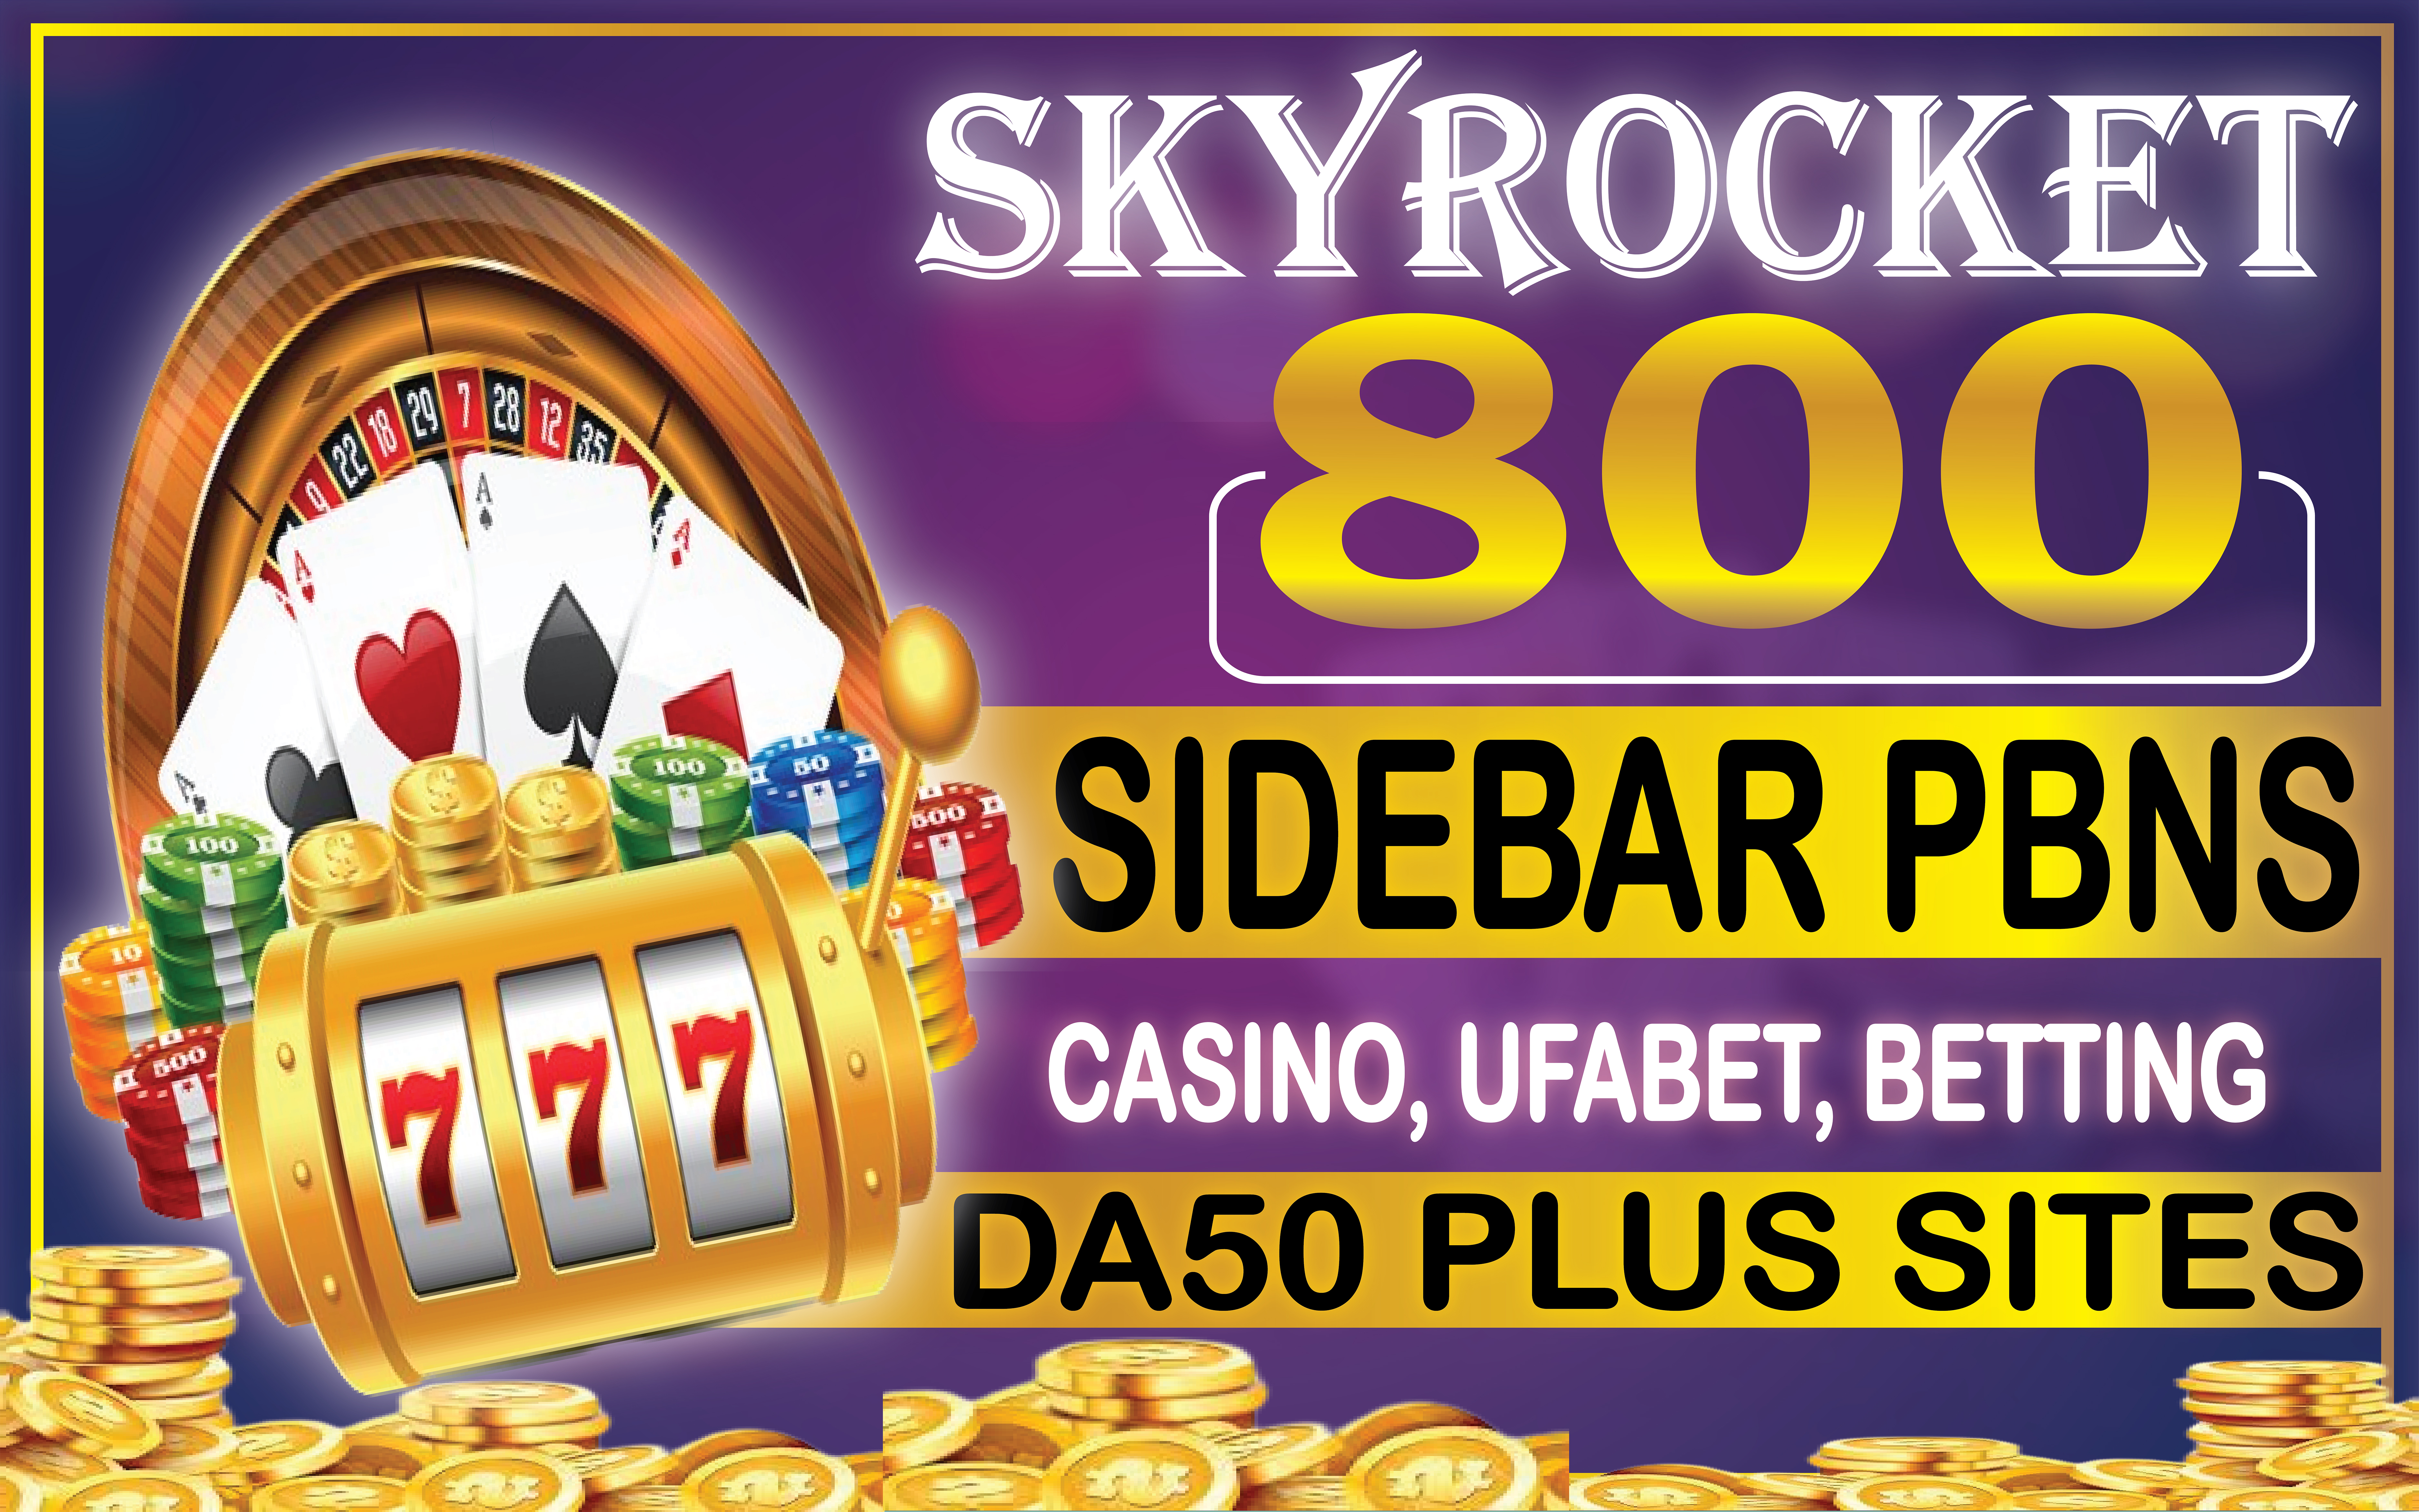 800 - Casino,Ufabet,Betting,Gambling SIDEBAR PBN's BACKLINKS WITH DA50 Plus SITES